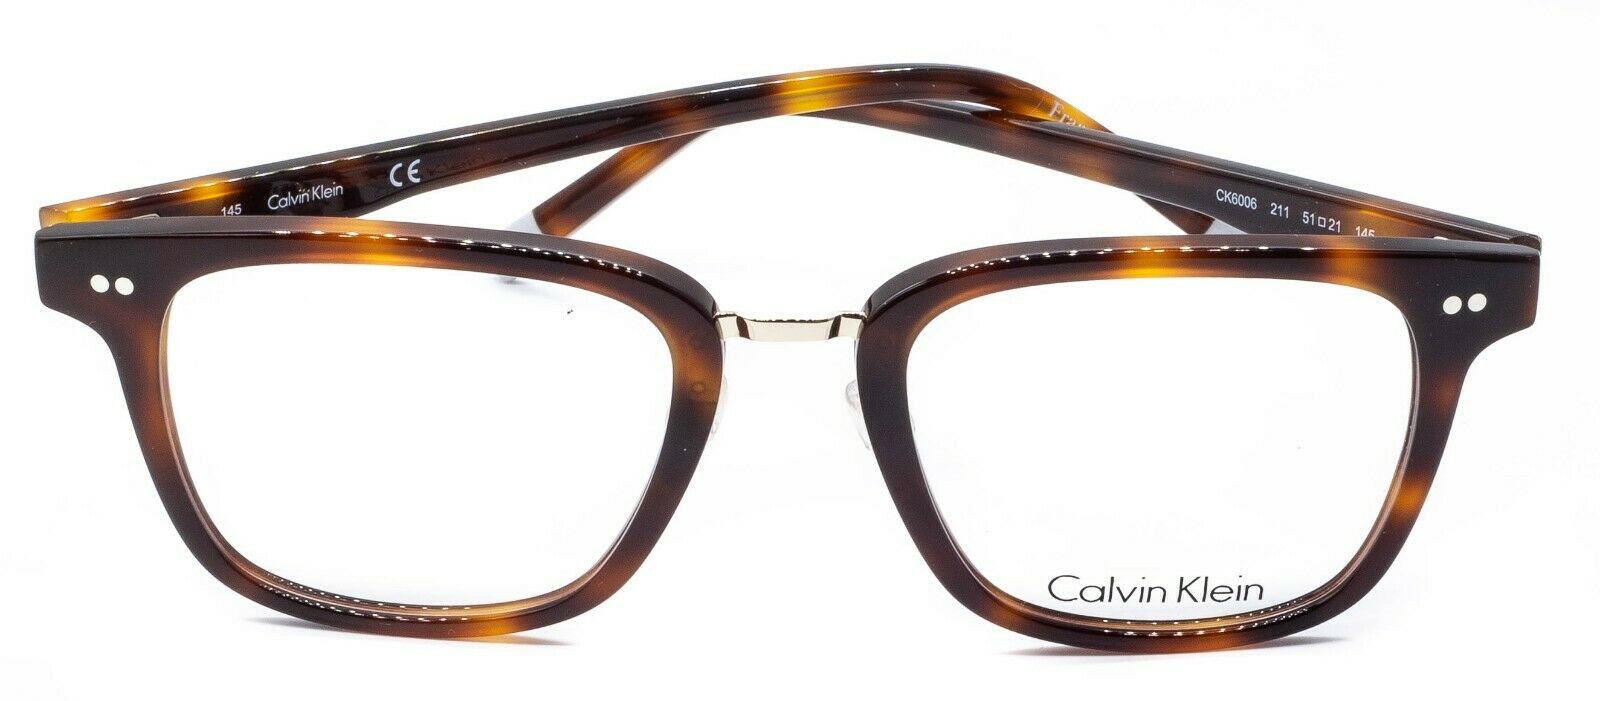 CALVIN KLEIN CK6006 211 51mm Eyewear RX Optical FRAMES Eyeglasses Glasses - New